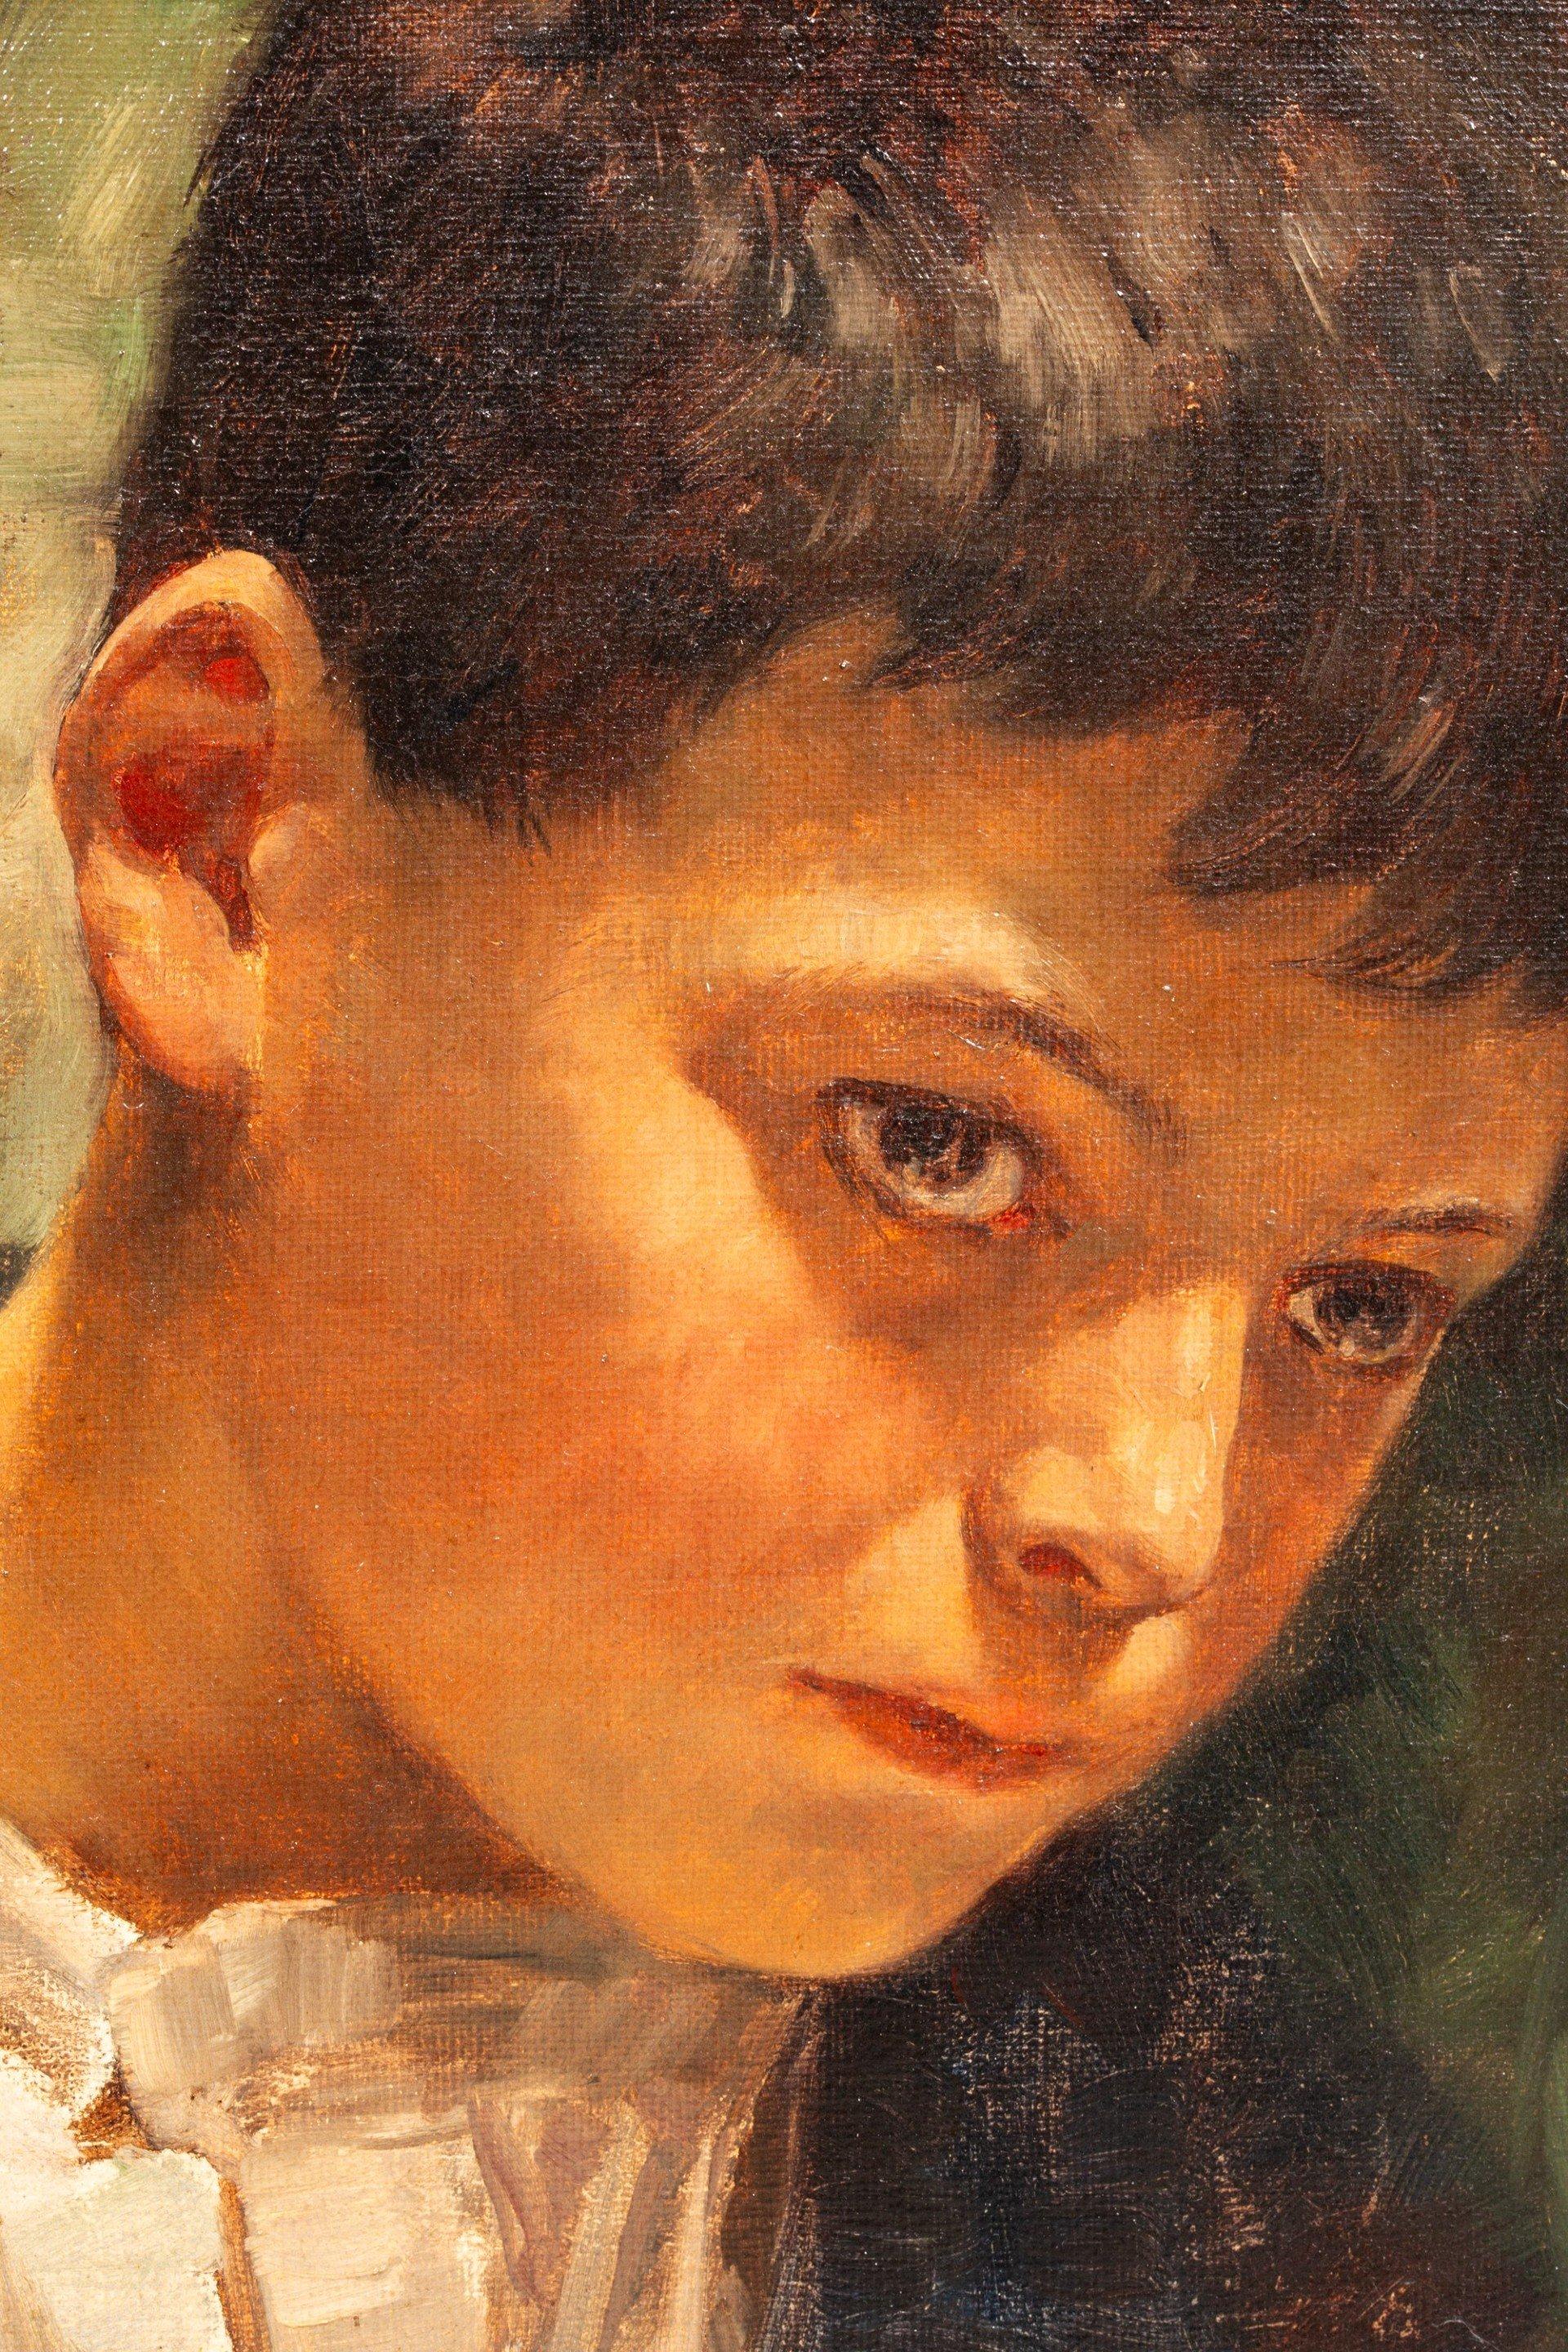  Meyer-Waldeck Kunz Portrait Painting - Study head of nostalgia, portrait of a melancholy-looking boy in a white shirt